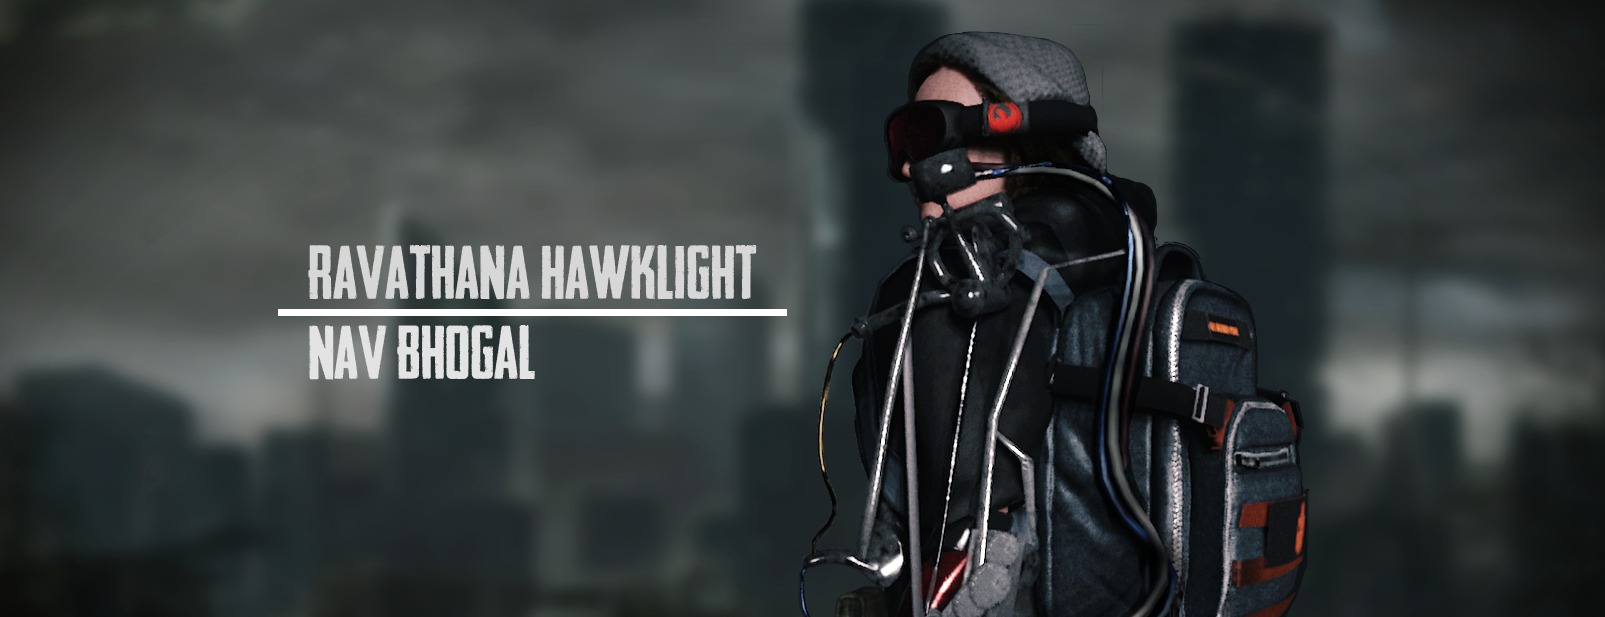 Ravathana Hawklight - The Rogue